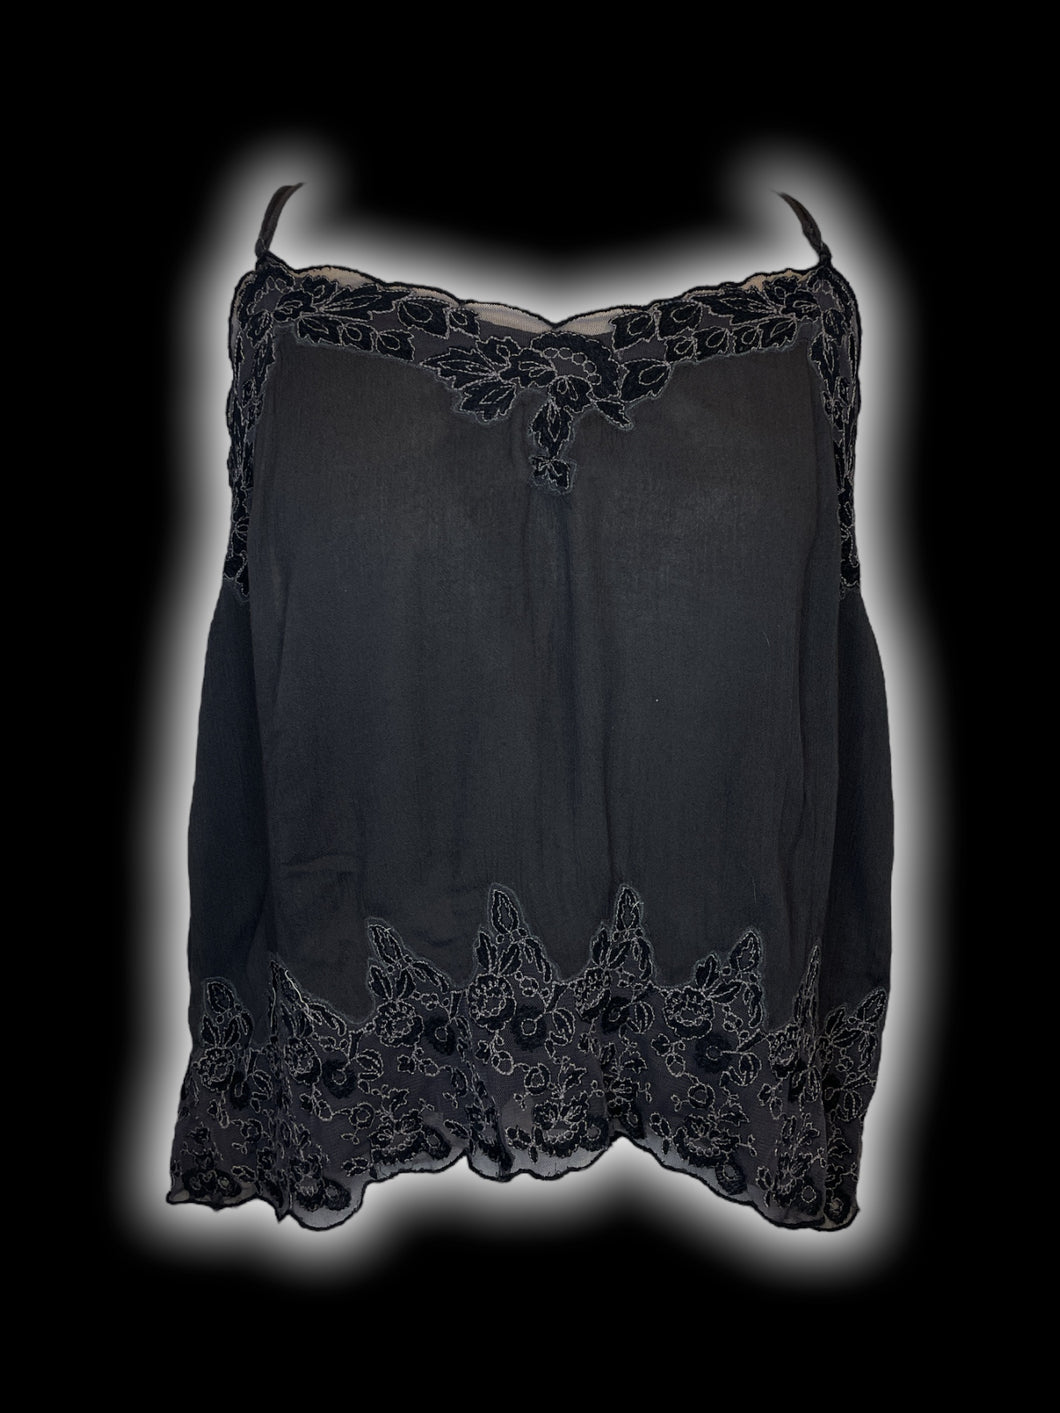 2X Dark grey, black, & light grey floral embroidery sleeveless v-neckline top w/ adjustable straps, & scalloped hem